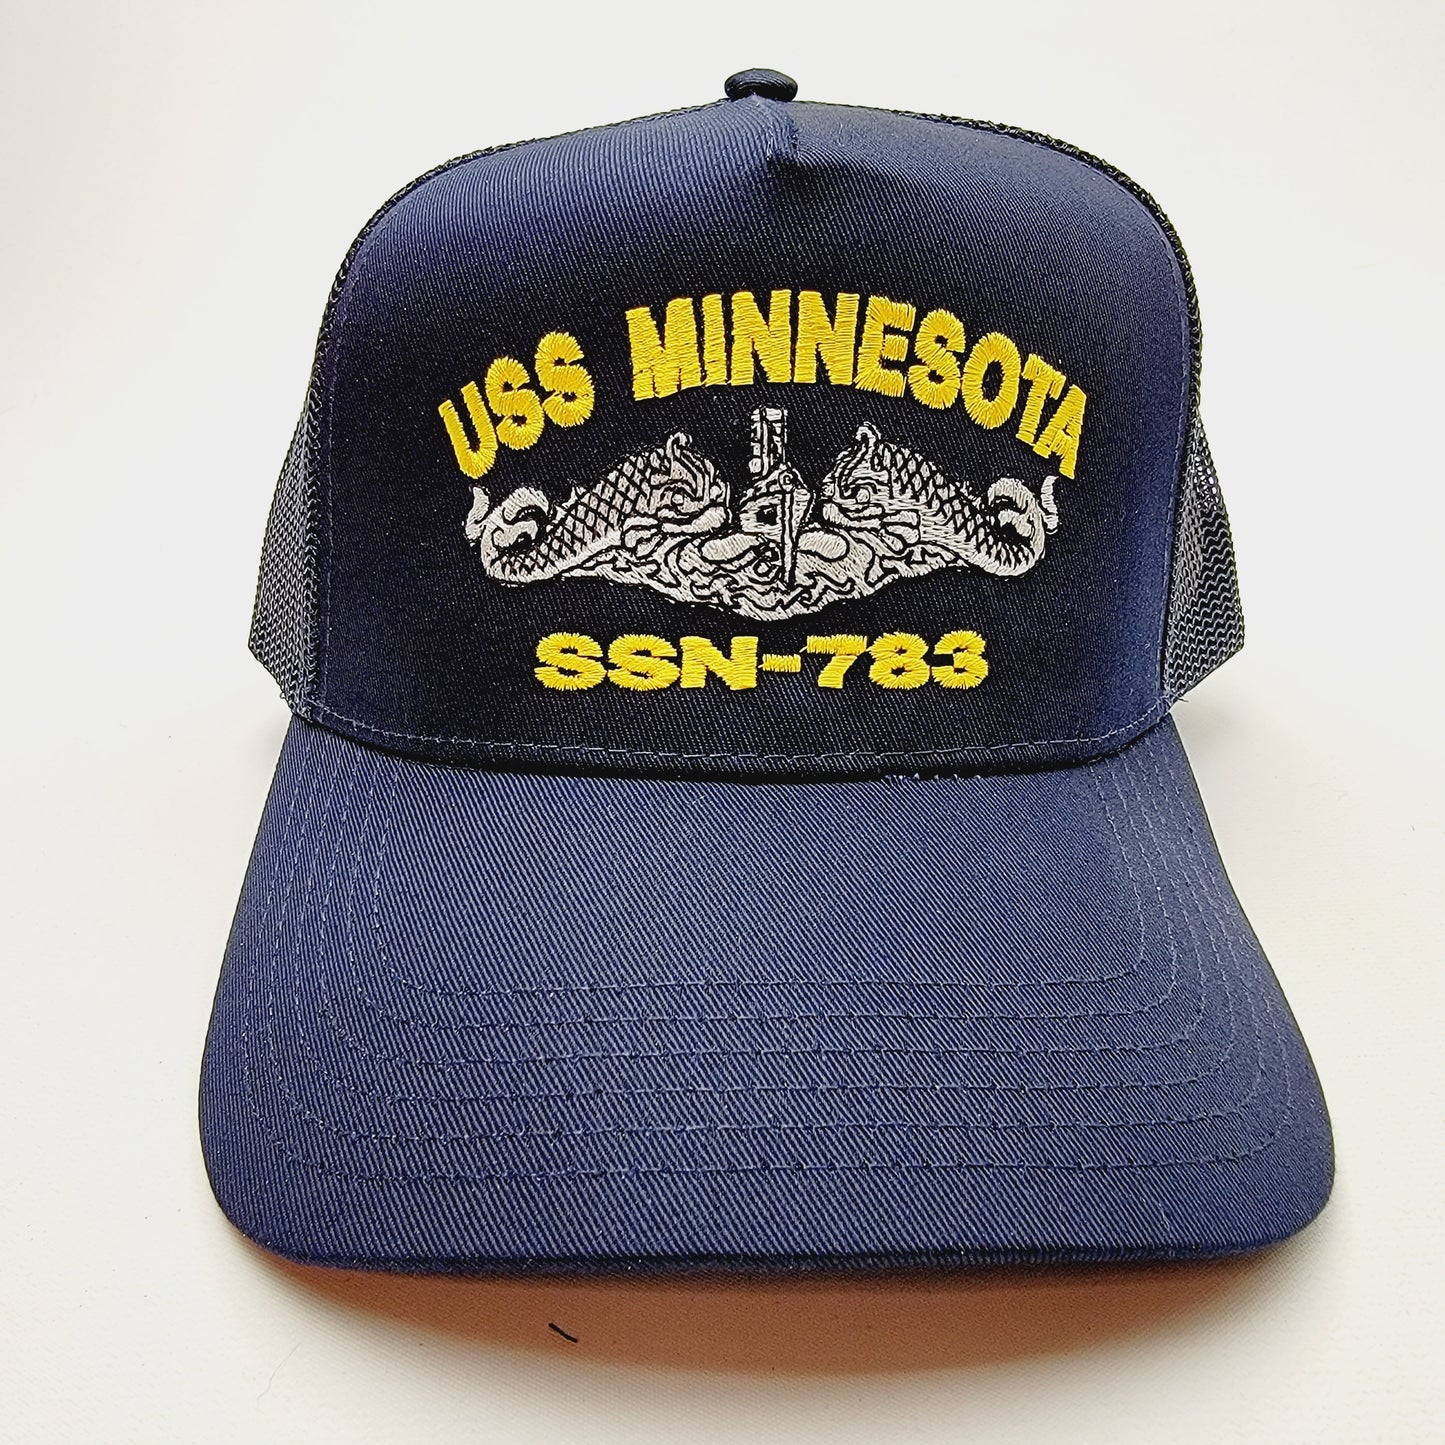 US NAVY USS MINNESOTA SSN-783 Embroidered Hat Baseball Cap Adjustable Blue